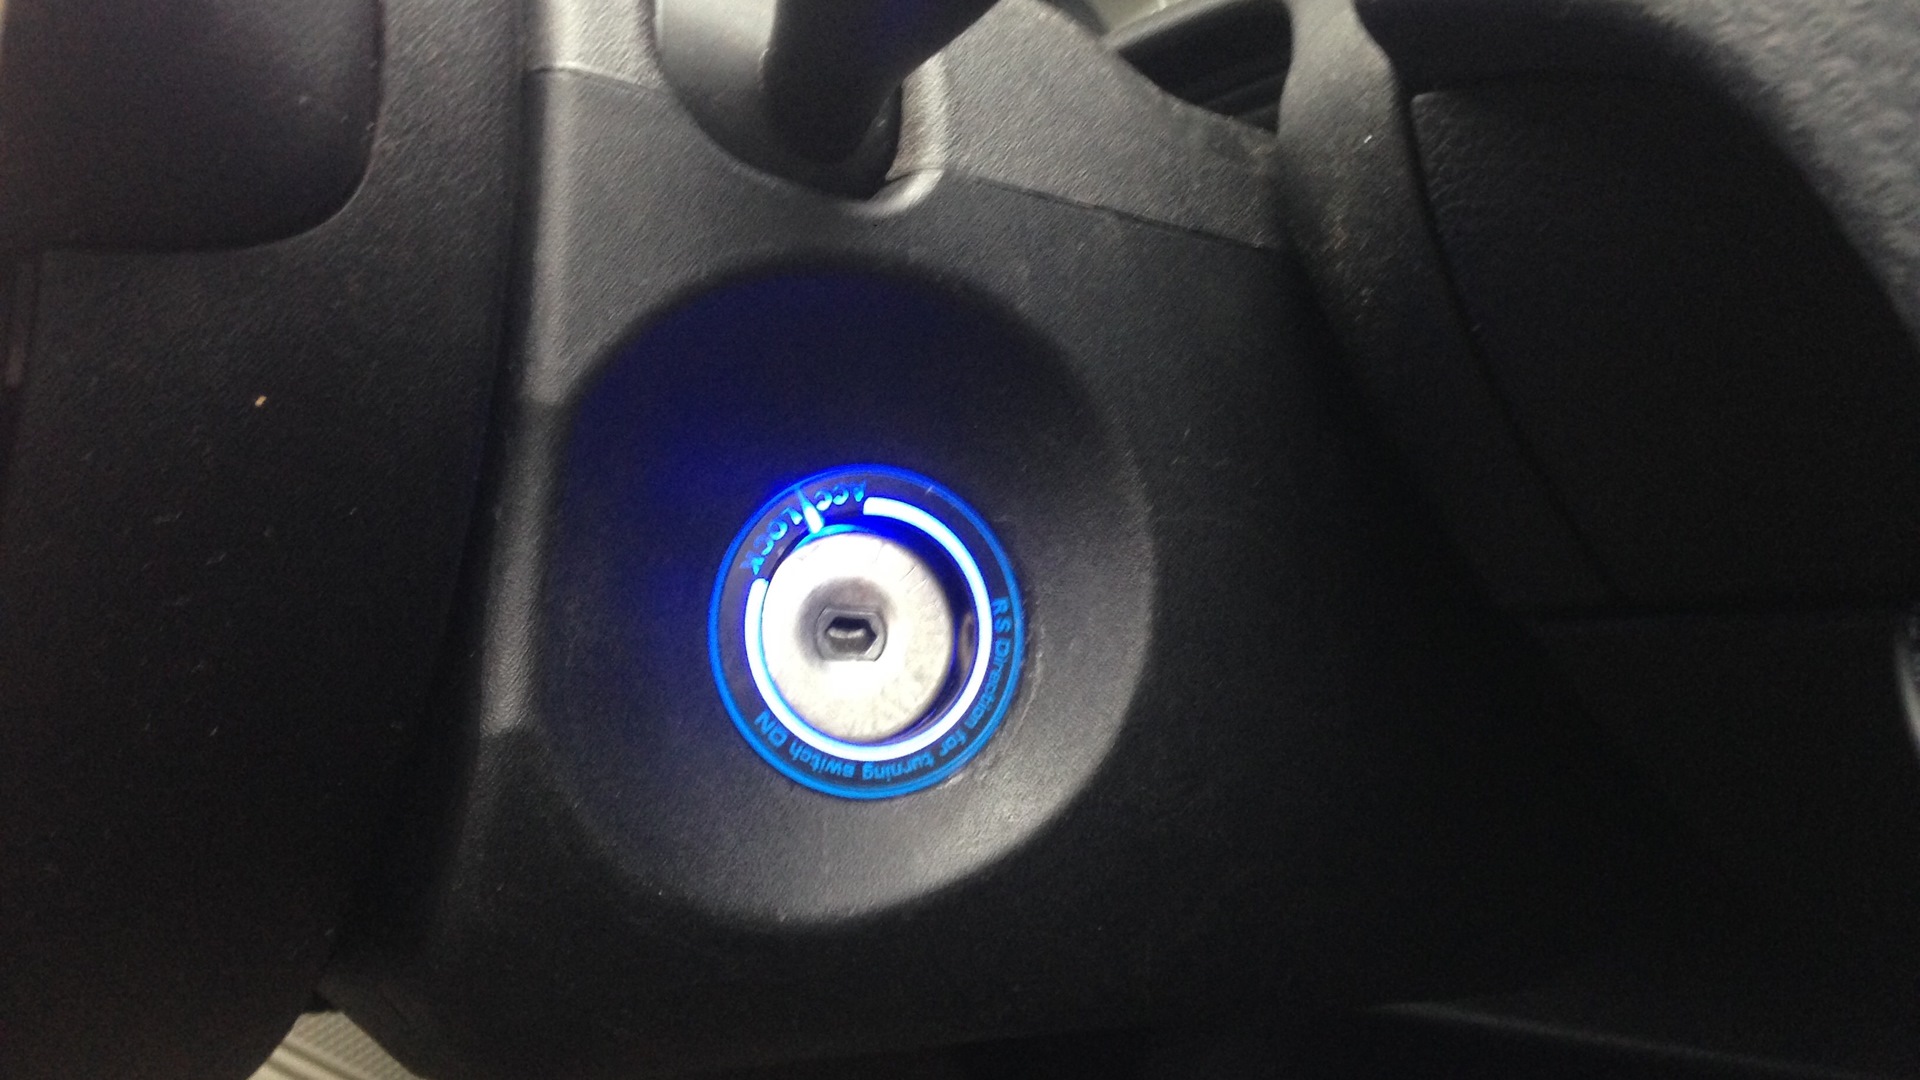 Замок зажигания фьюжн. Подсветка замка зажигания Форд Фьюжен. Подсветка замка зажигания Hyundai Accent ТАГАЗ. Подсветка замка зажигания Форд фокус 2. Подсветка замка зажигания Mazda CX-7.